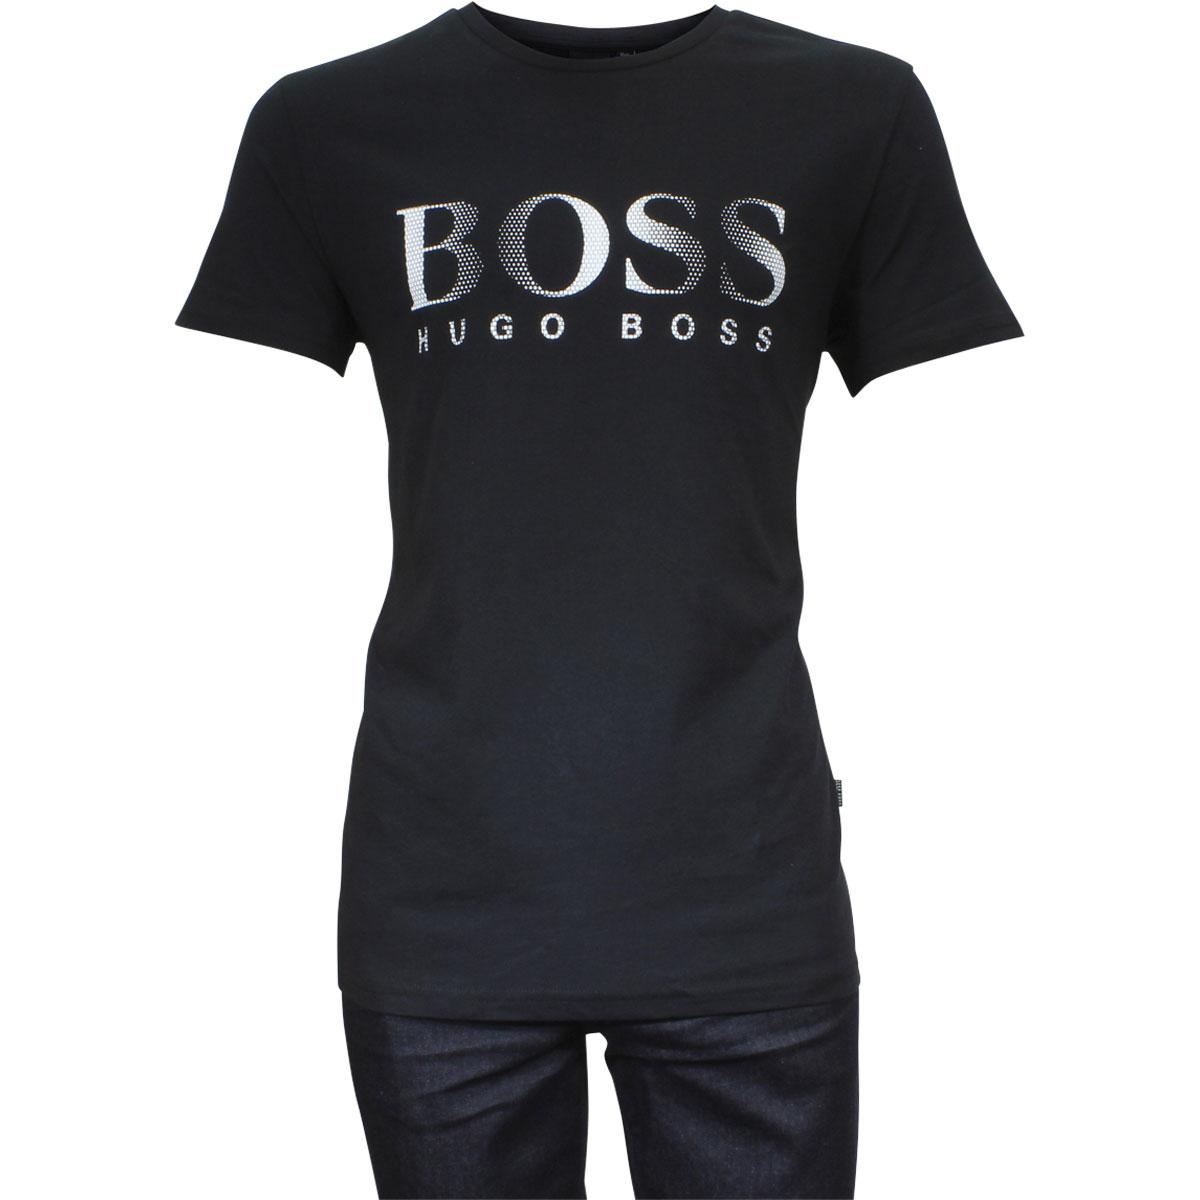 hugo boss round neck t shirts